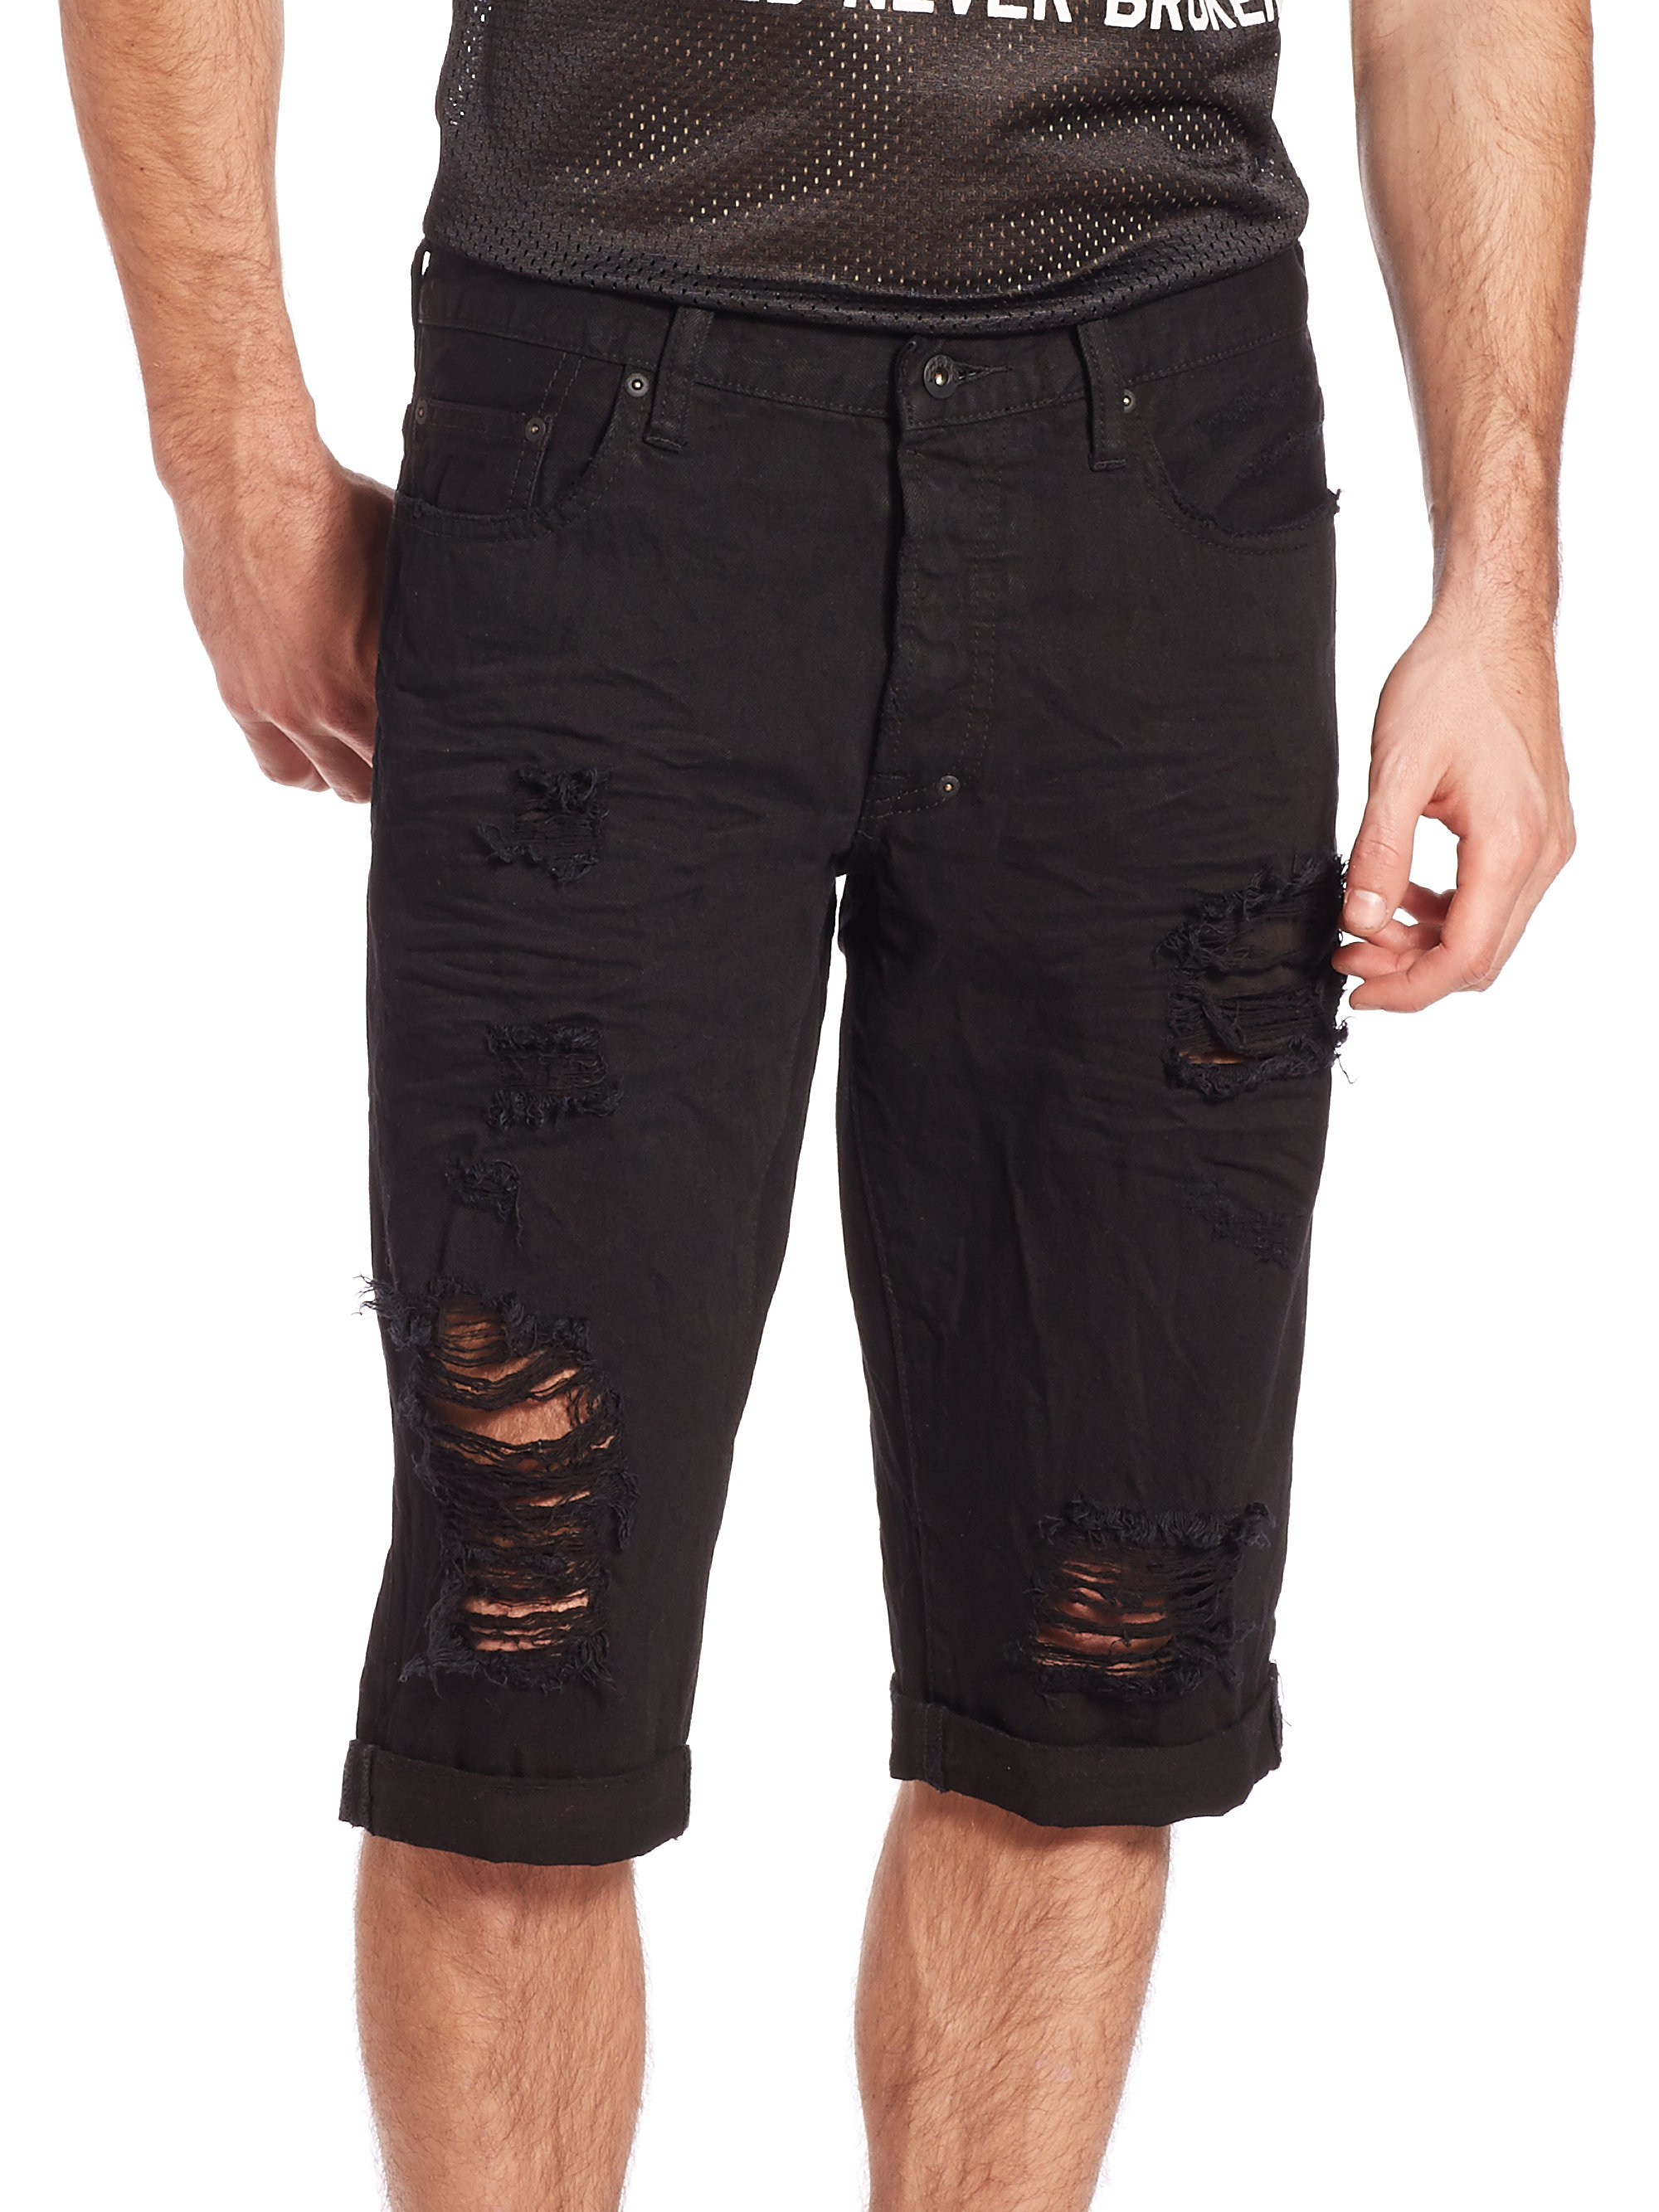 Prps Black Distressed Denim Shorts Product 0 993290782 Normal 